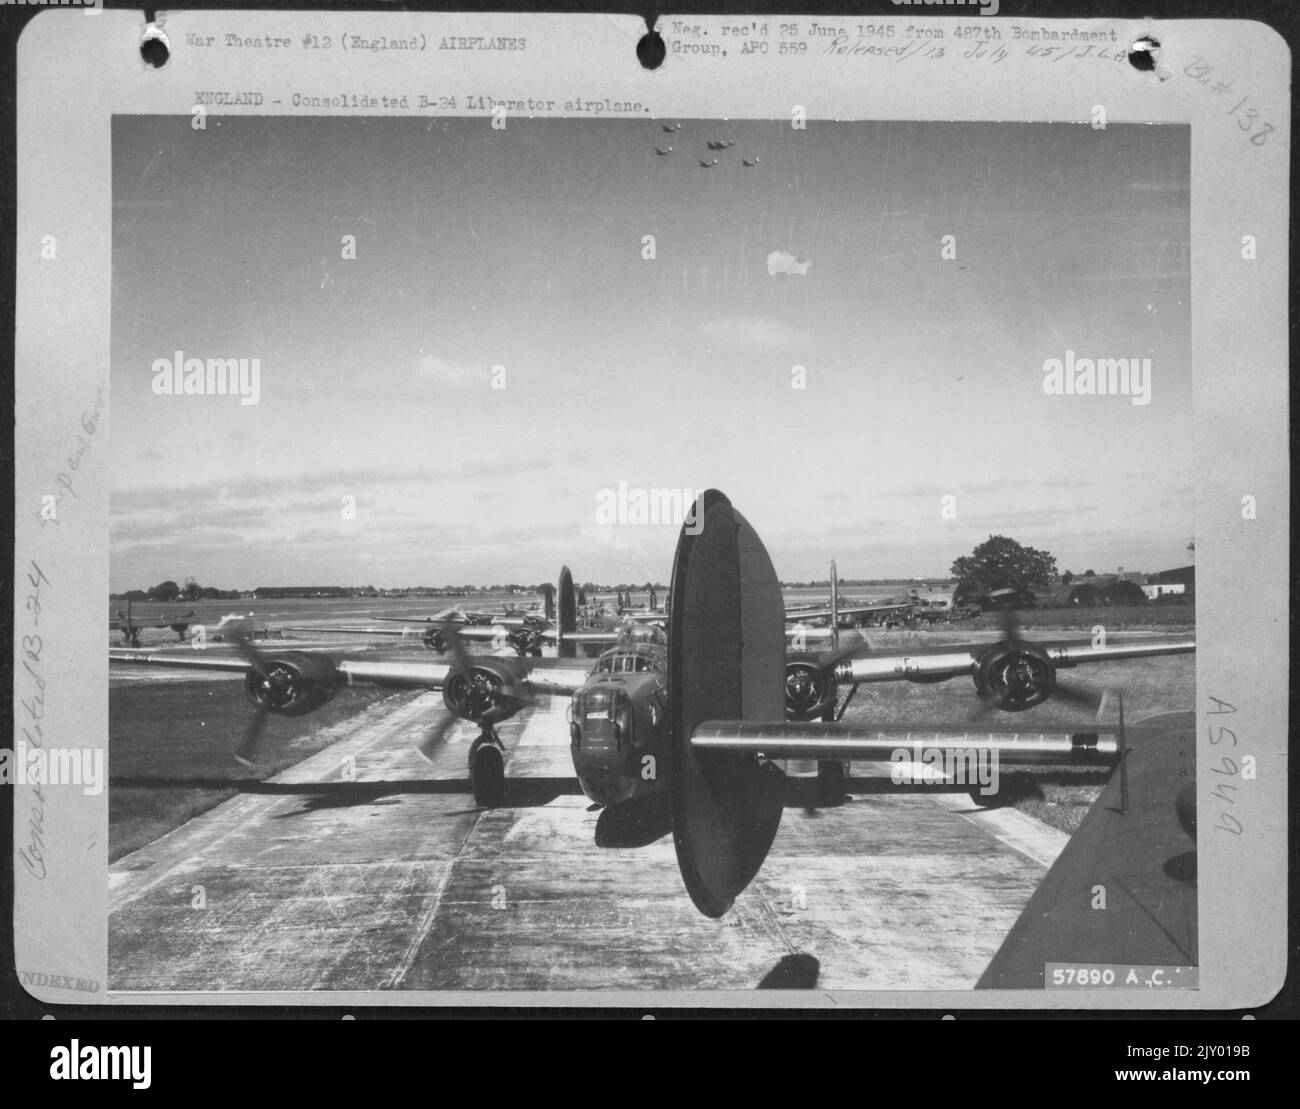 England - Consolidated B-24 Liberator Airplane. Stockfoto